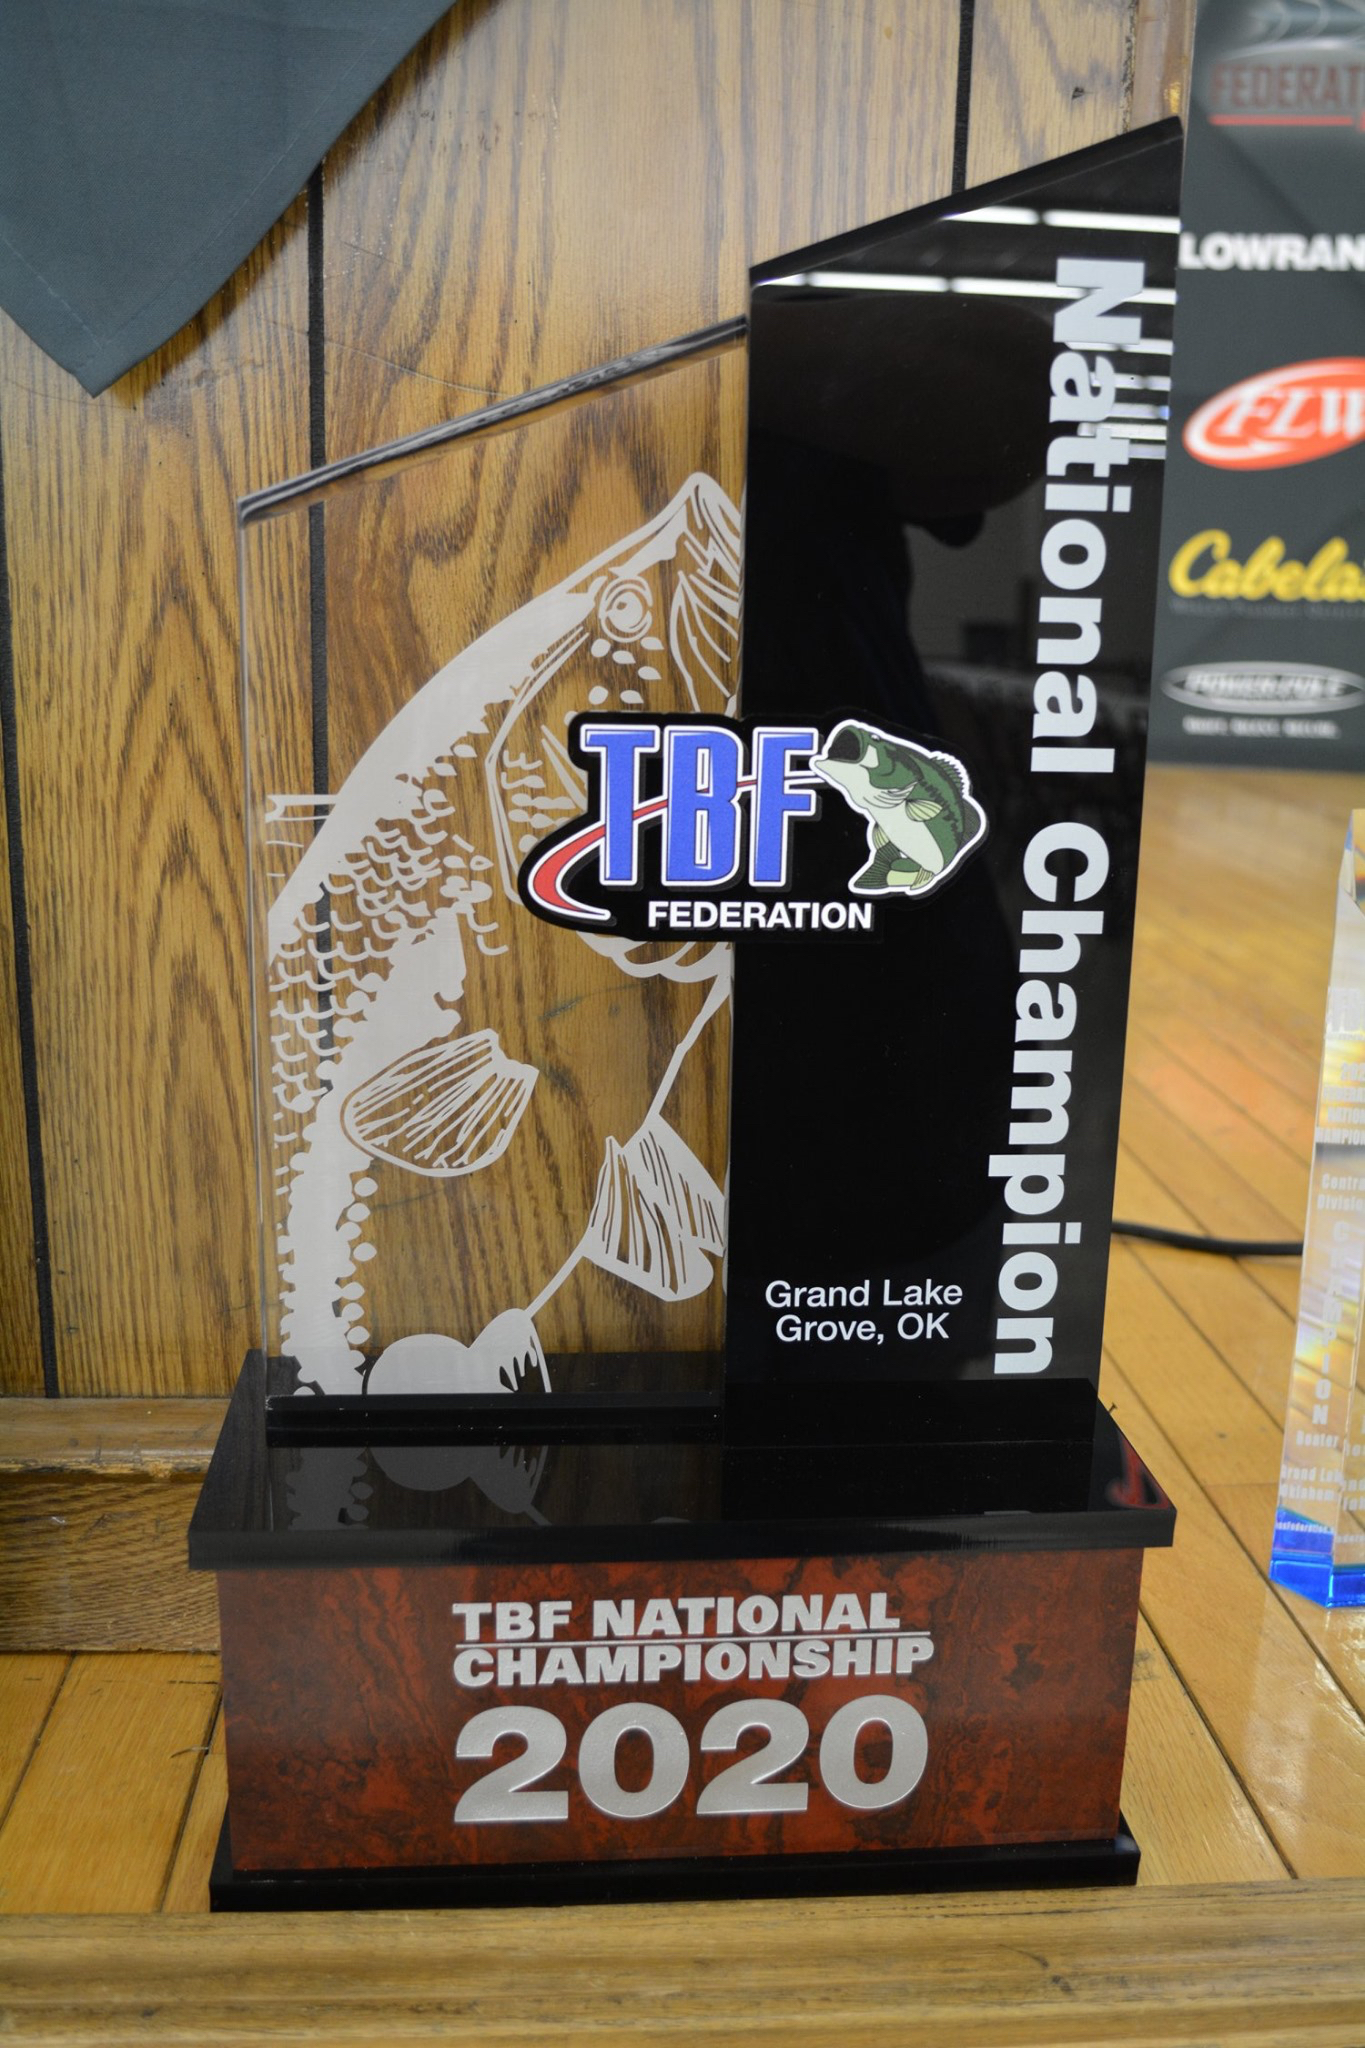 2020 TBF Federation National Championship Kicks Off this Week The